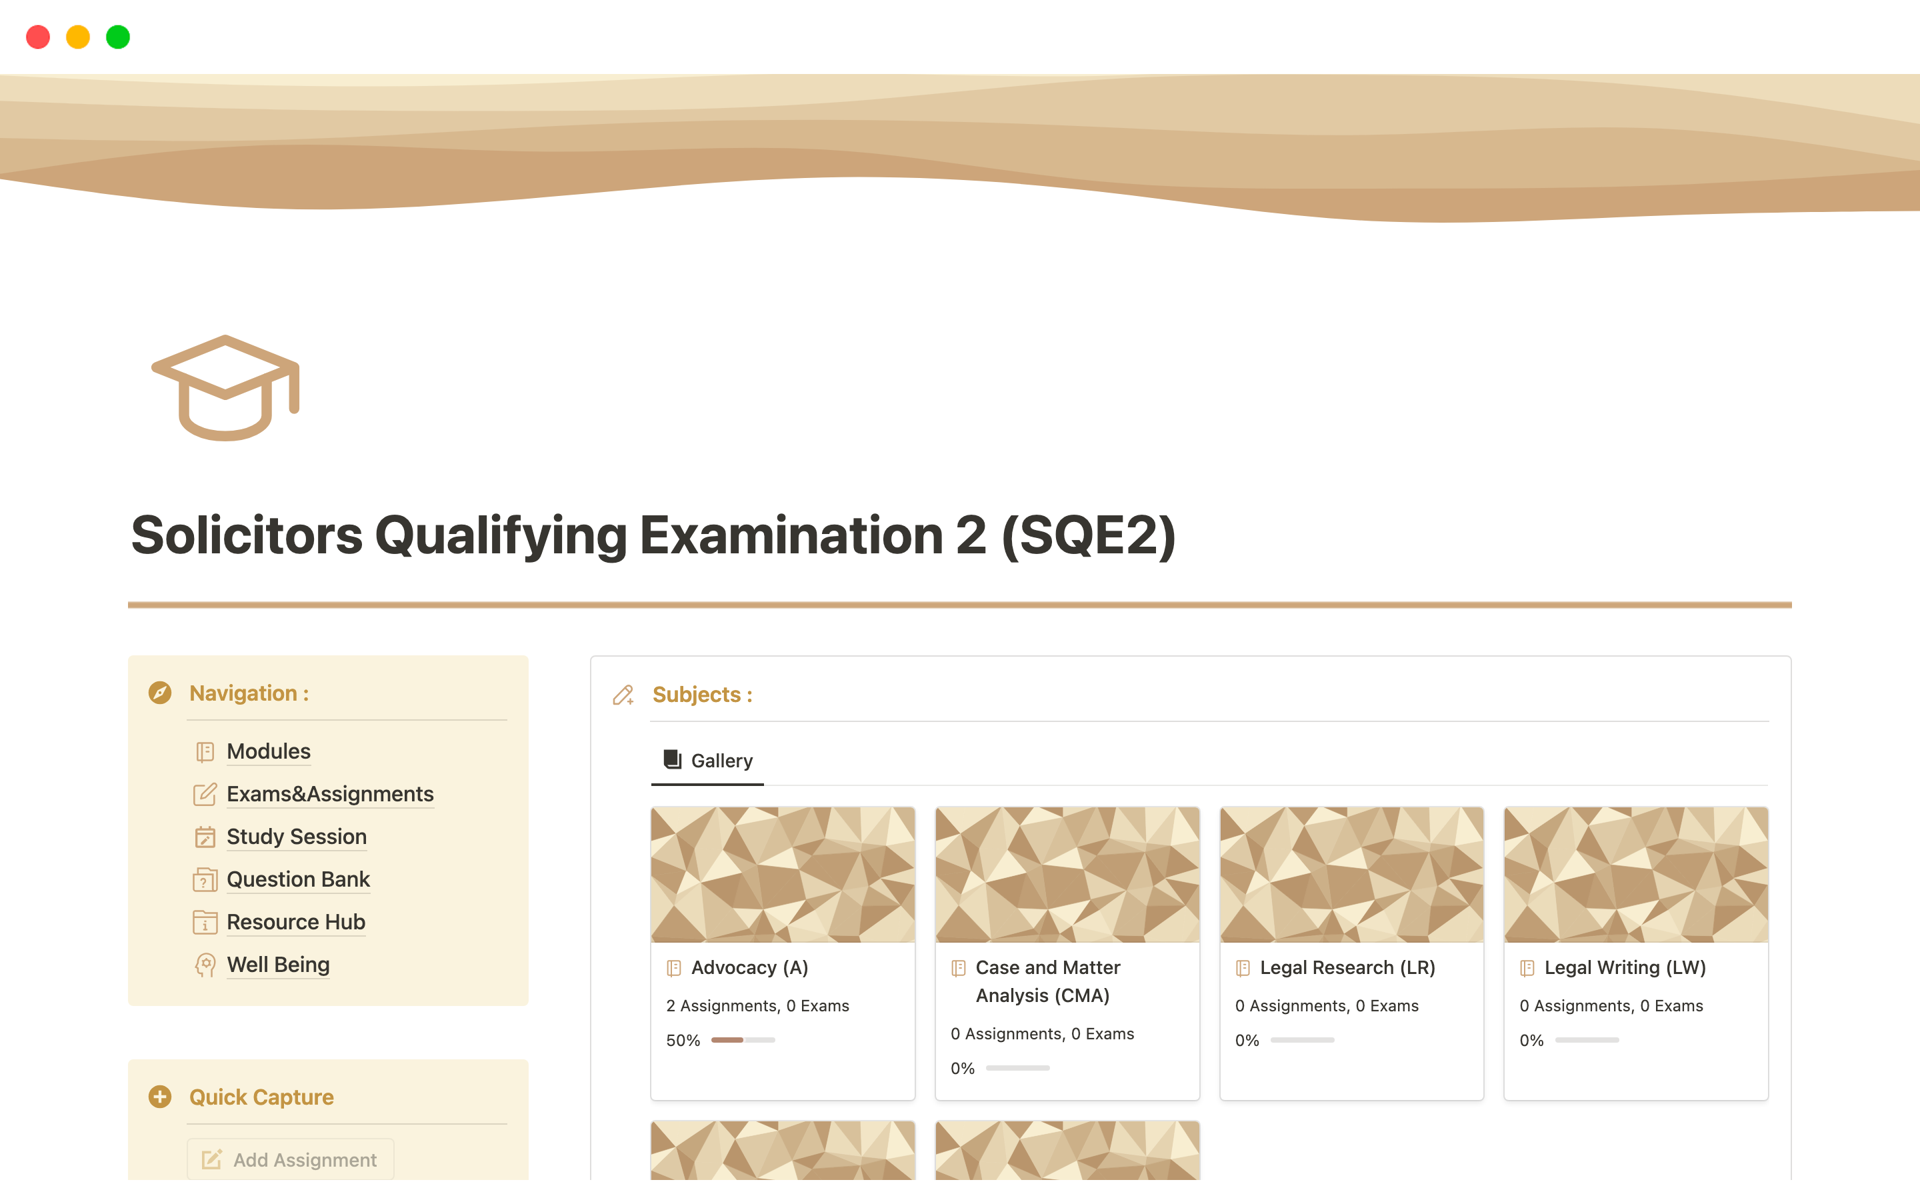 Vista previa de una plantilla para Solicitors Qualifying Examination 2 (SQE2)